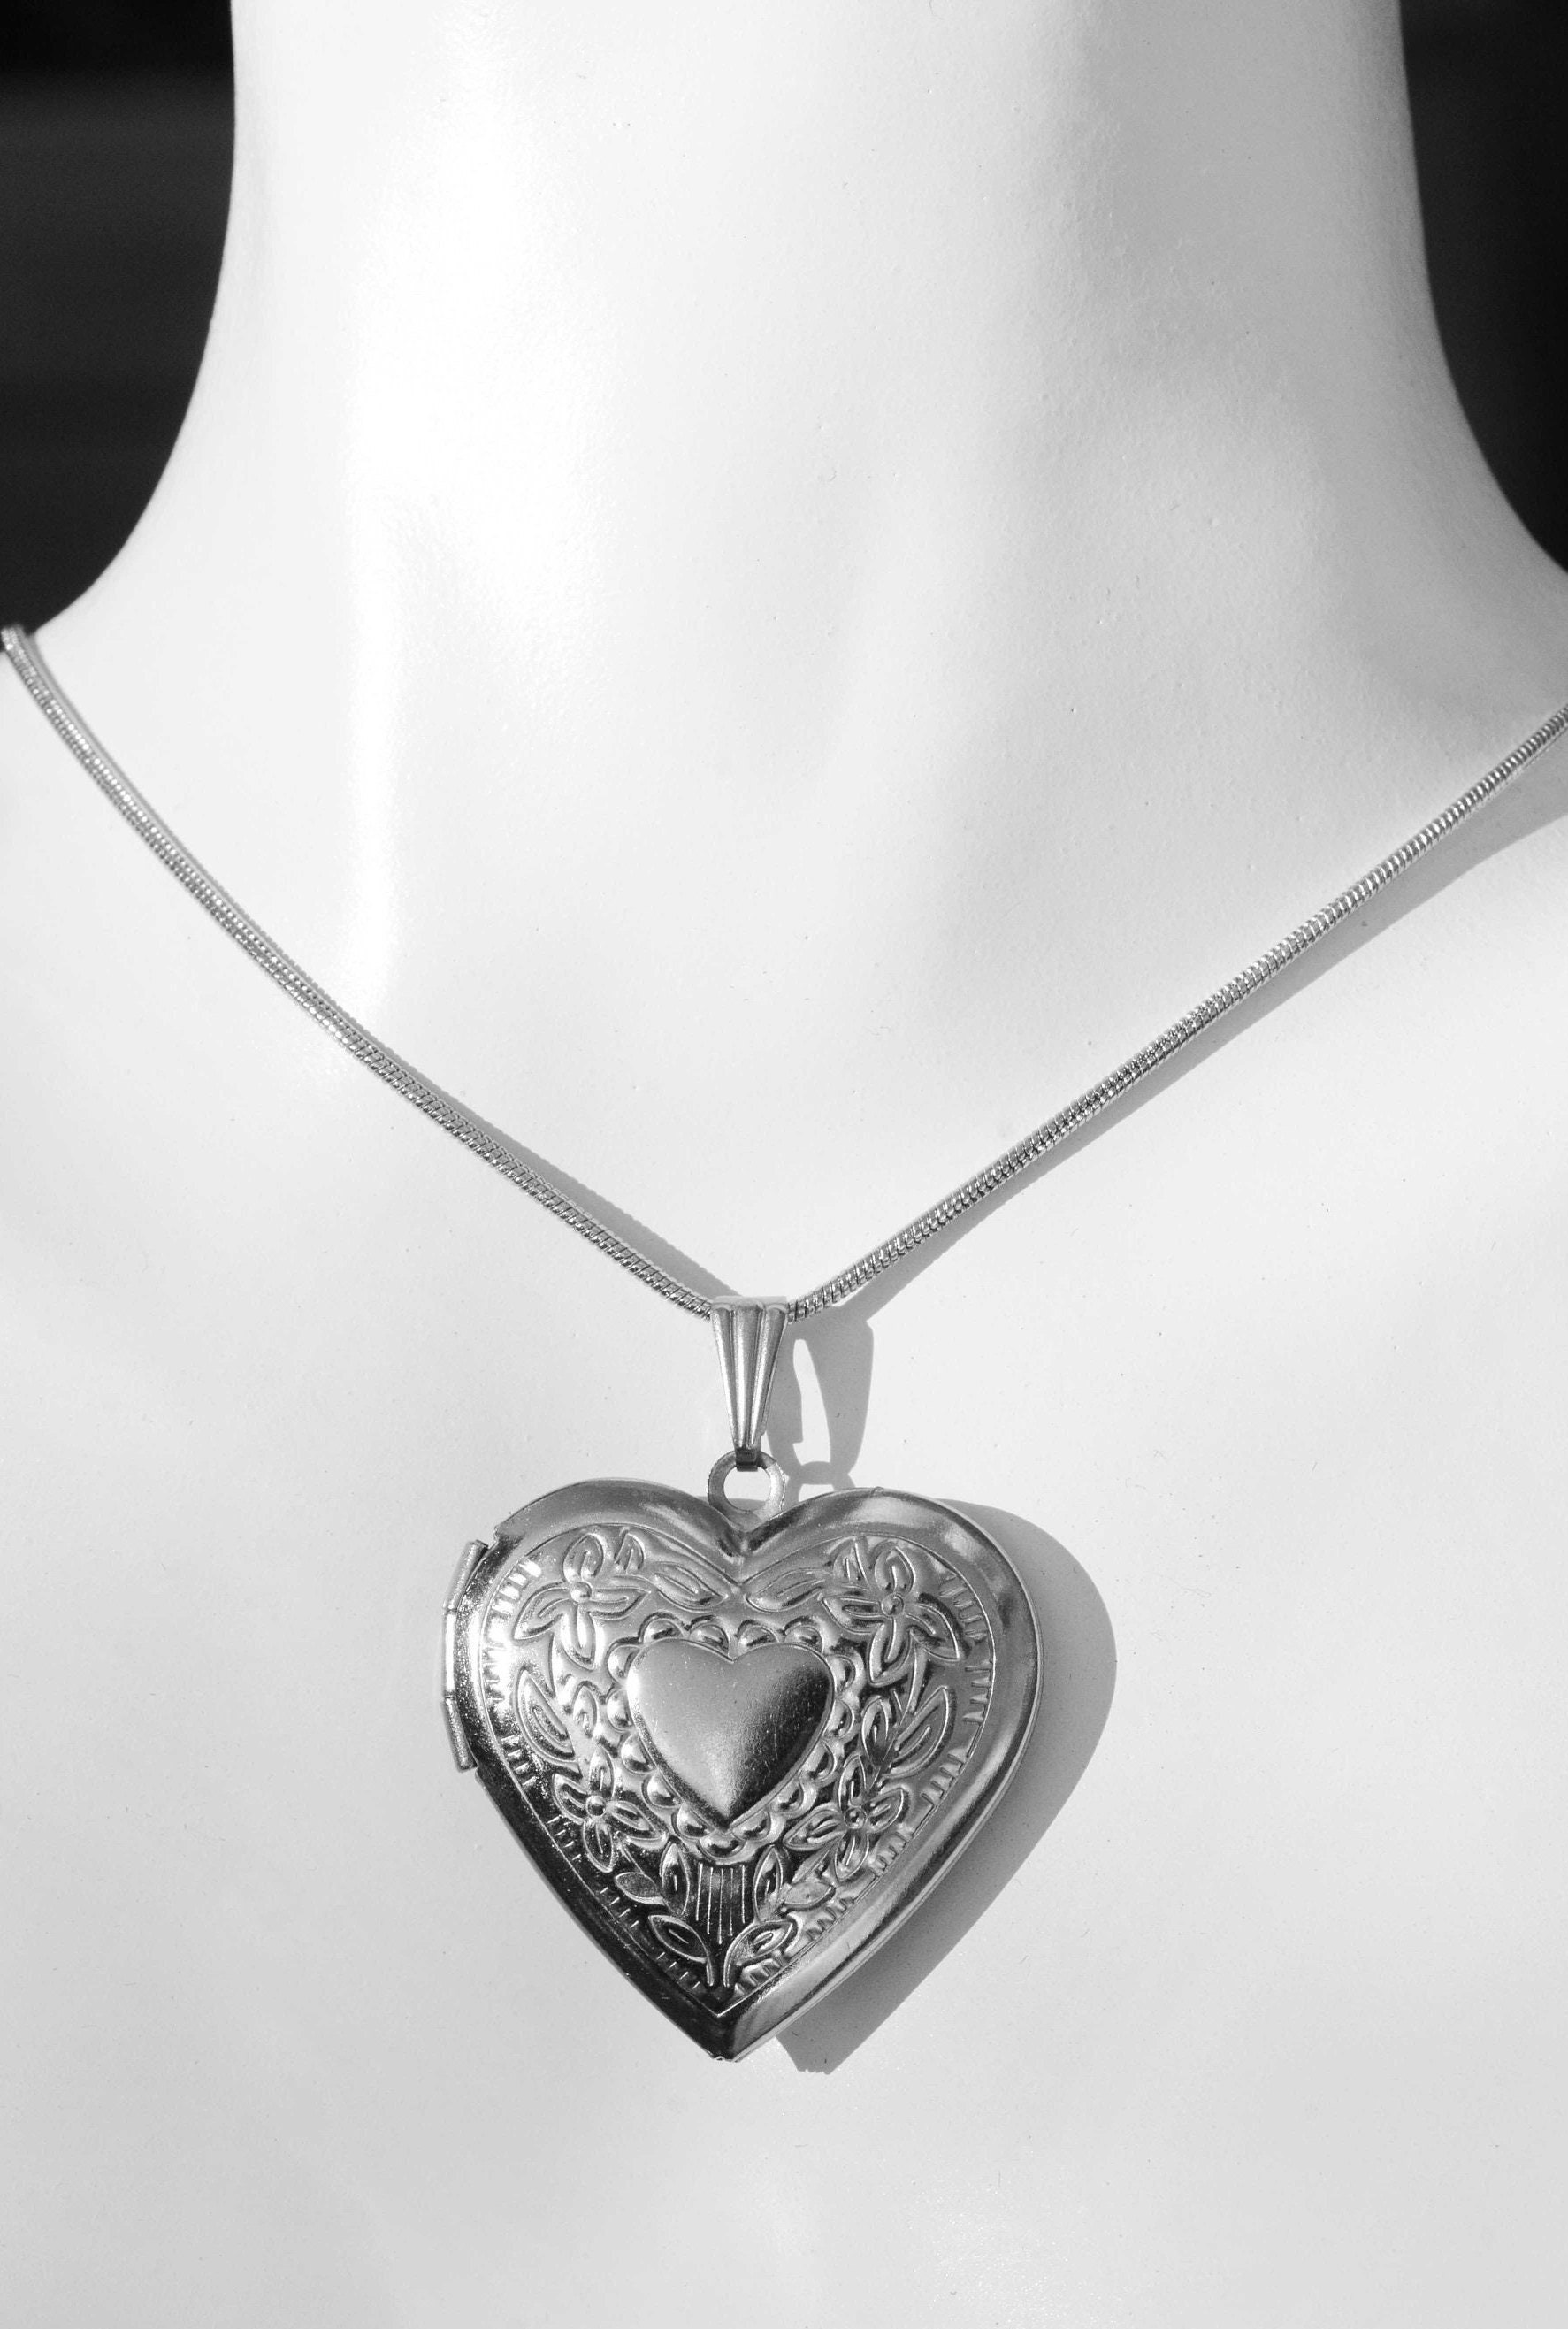 Astonishing Silver Heart Shaped Locket Pendant Slp30